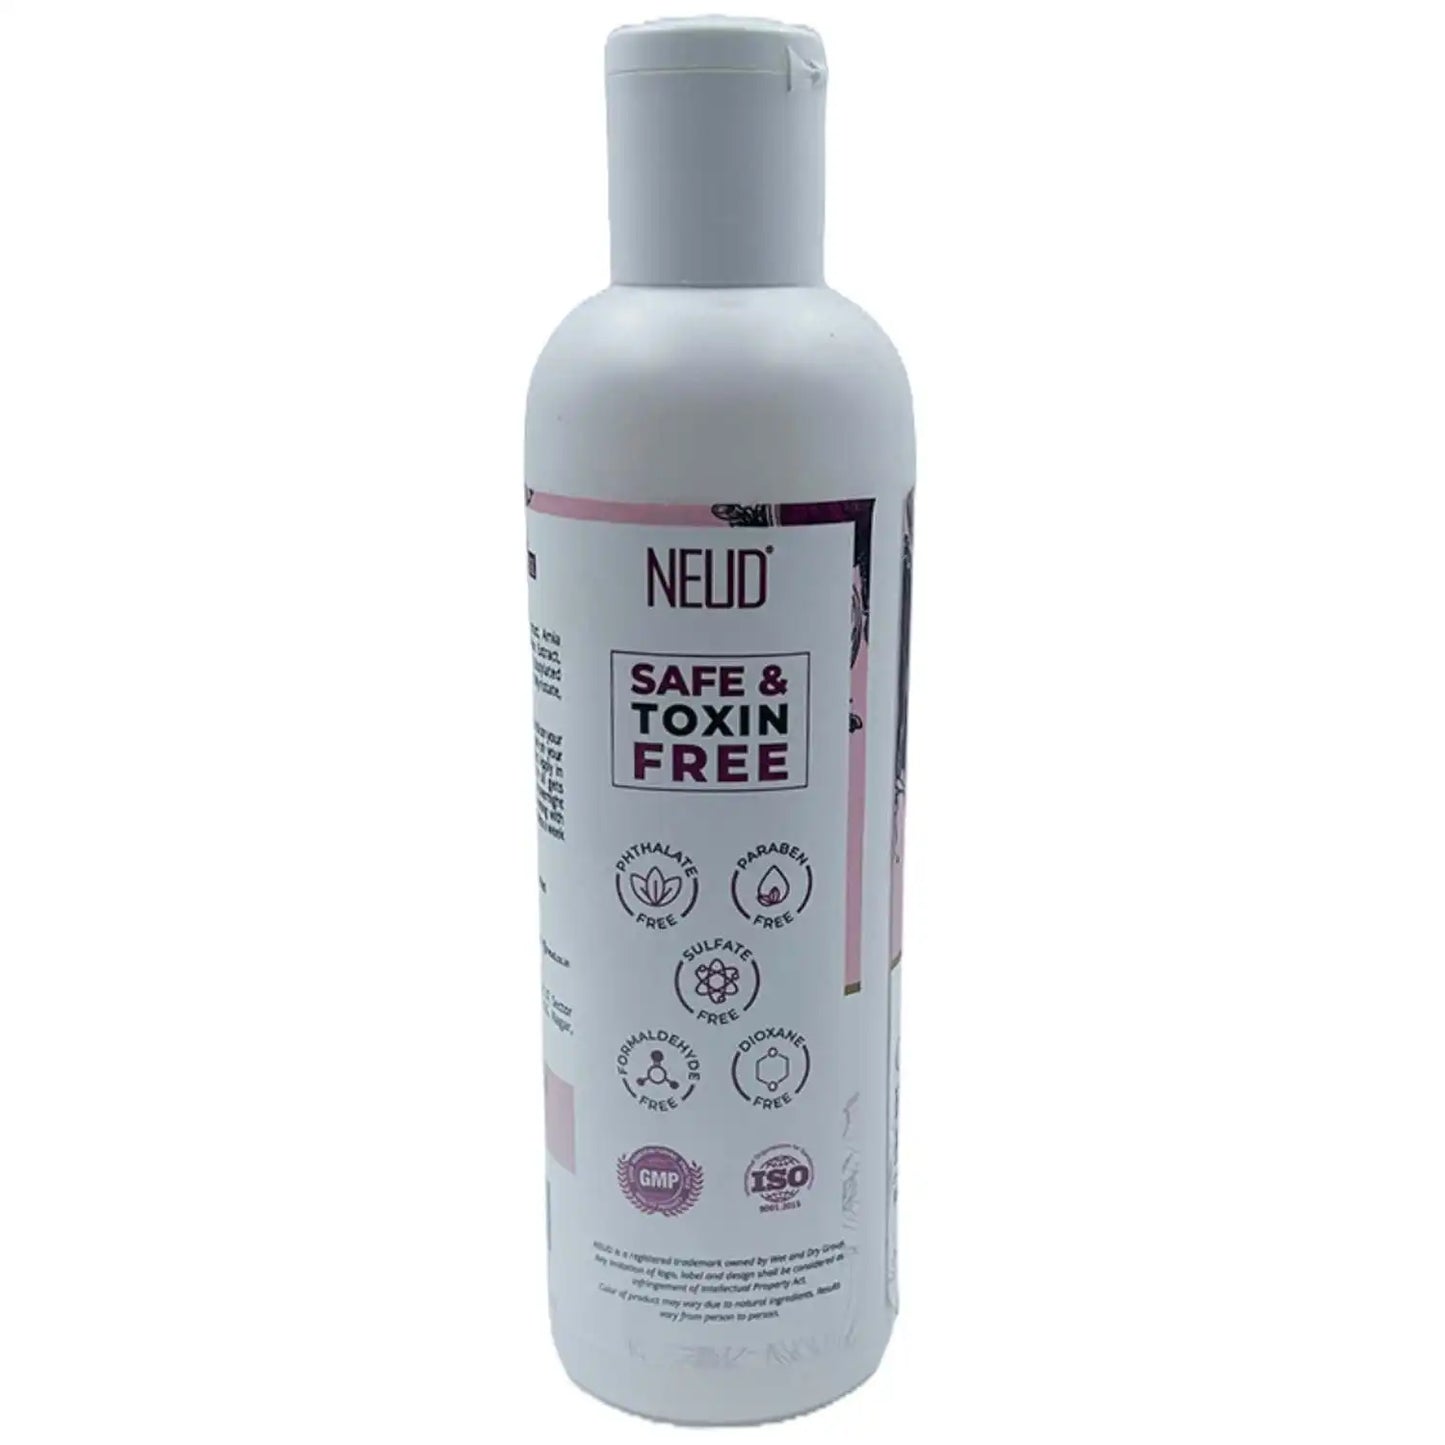 NEUD Premium Onion Hair Oil with Fenugreek for Men and Women - 250ml